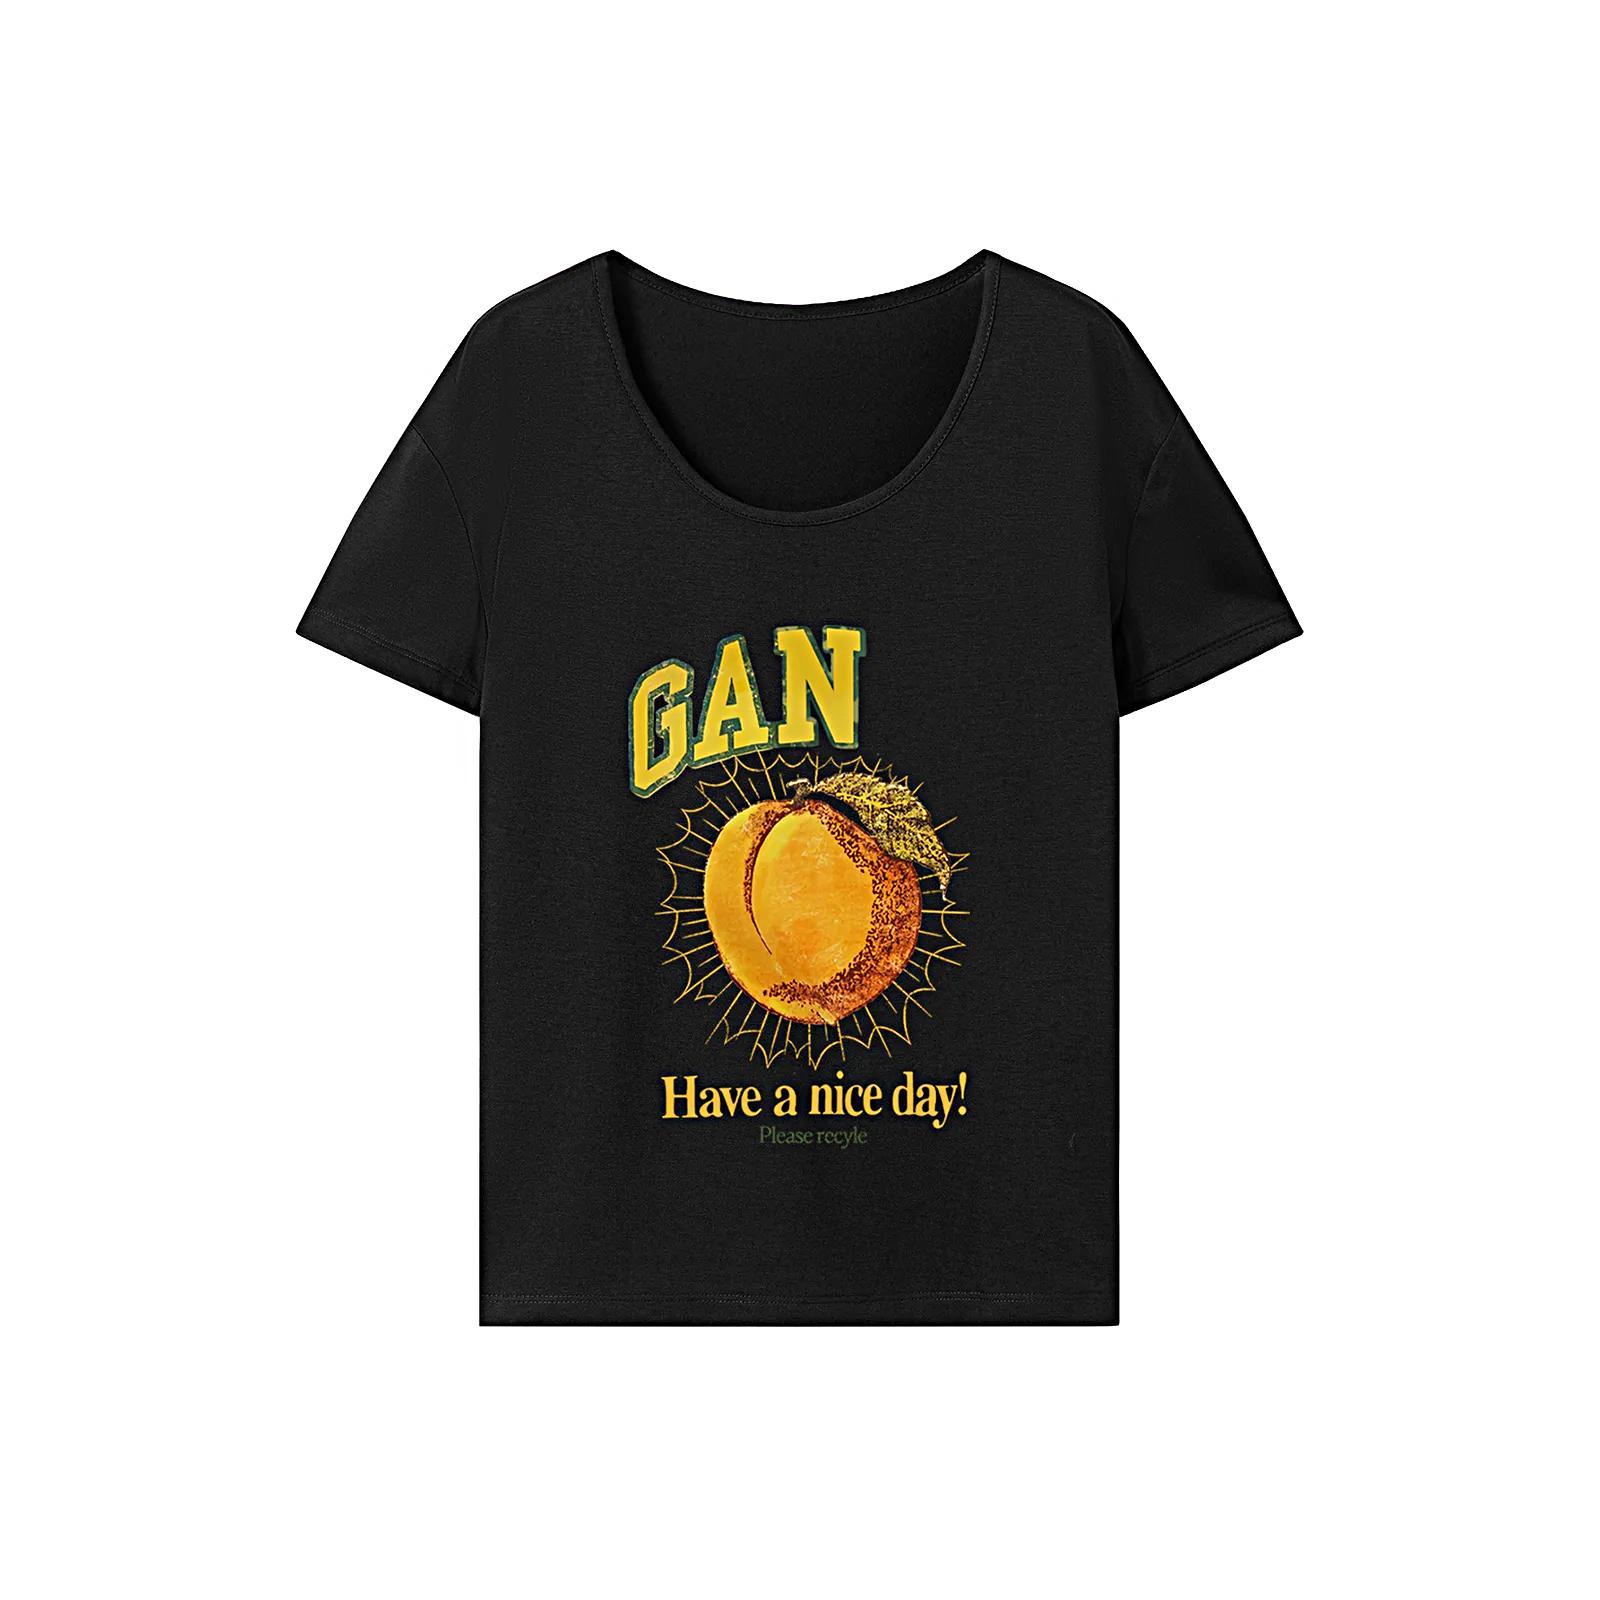 Women's T Shirt Summer Casual Basic Tee Shirt for Commuting Daily Wear Beach M